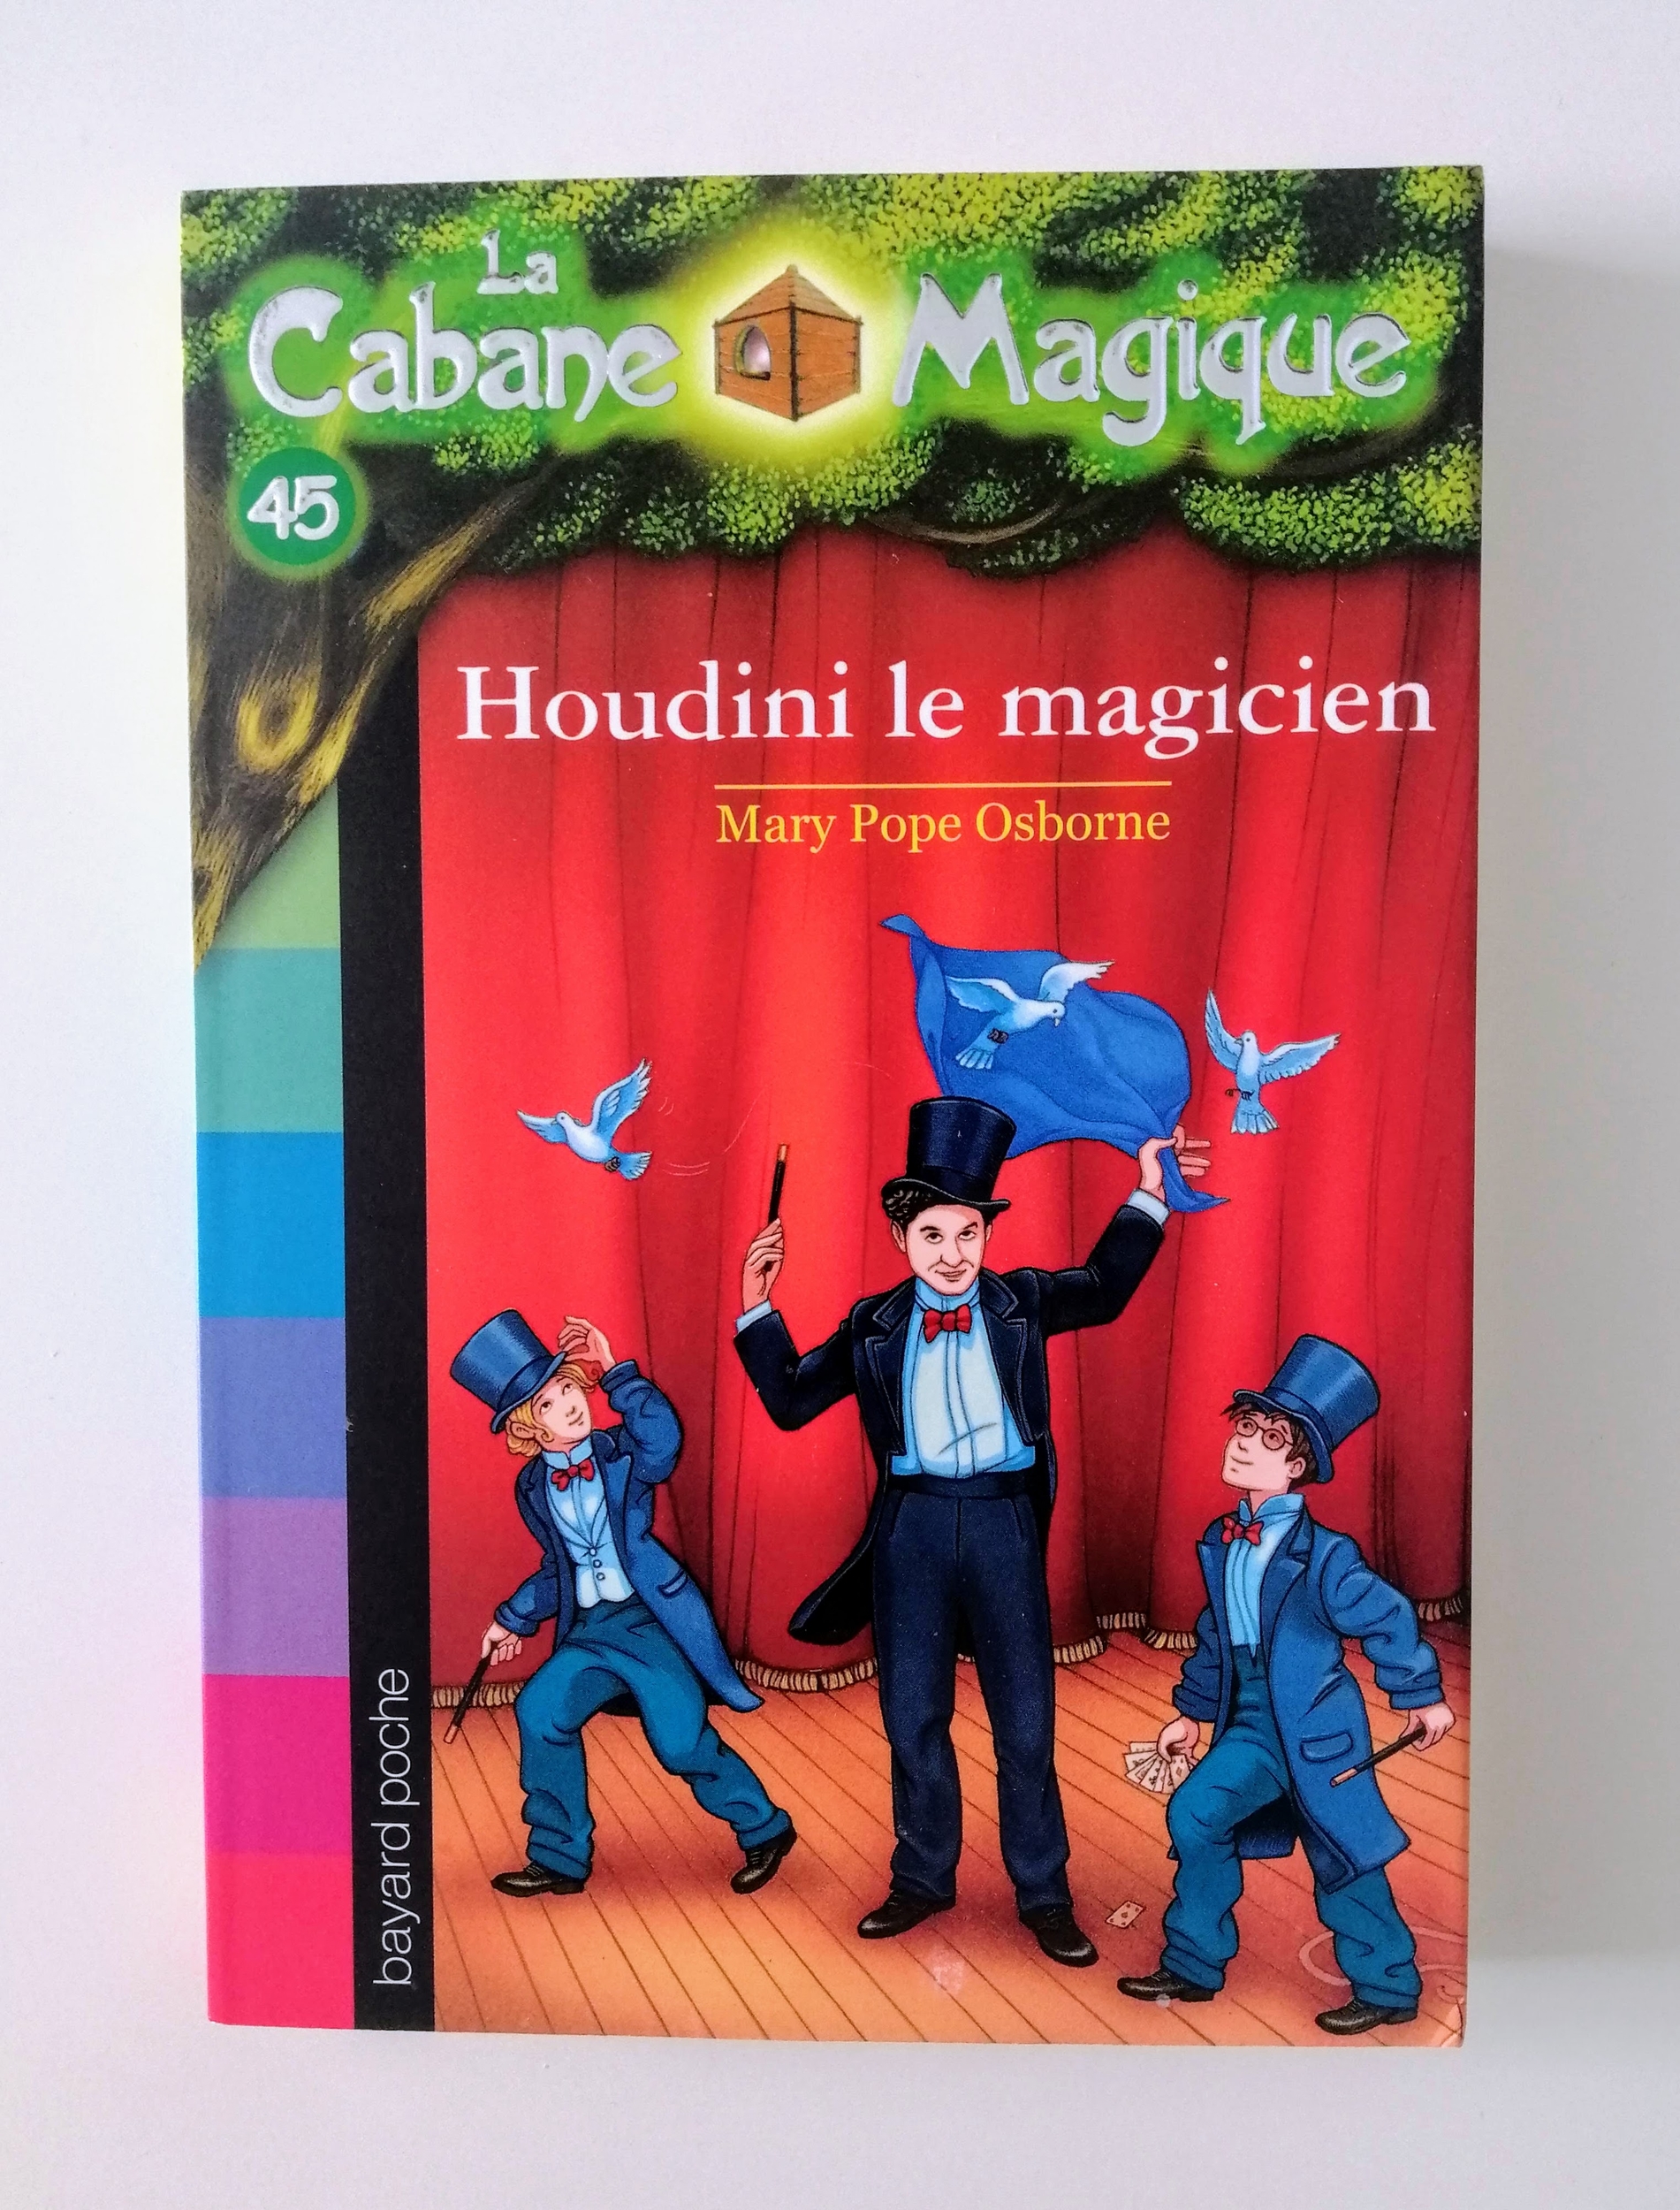 La cabane magique - Houdini le magicien (Mary Pope Osborne)